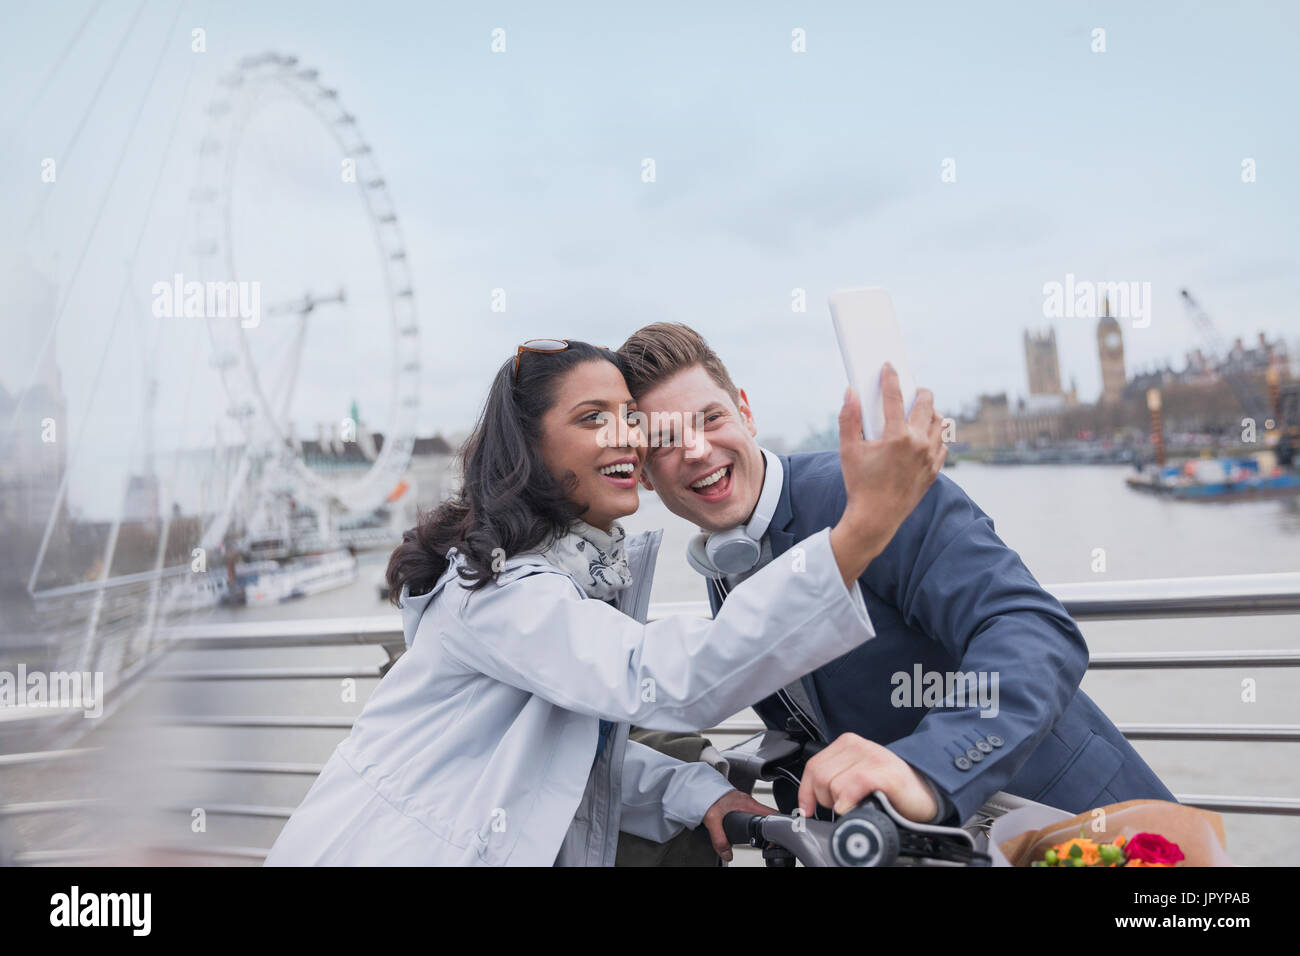 Smiling couple tourists taking selfie with camera phone on bridge near Millennium Wheel, London, UK Stock Photo